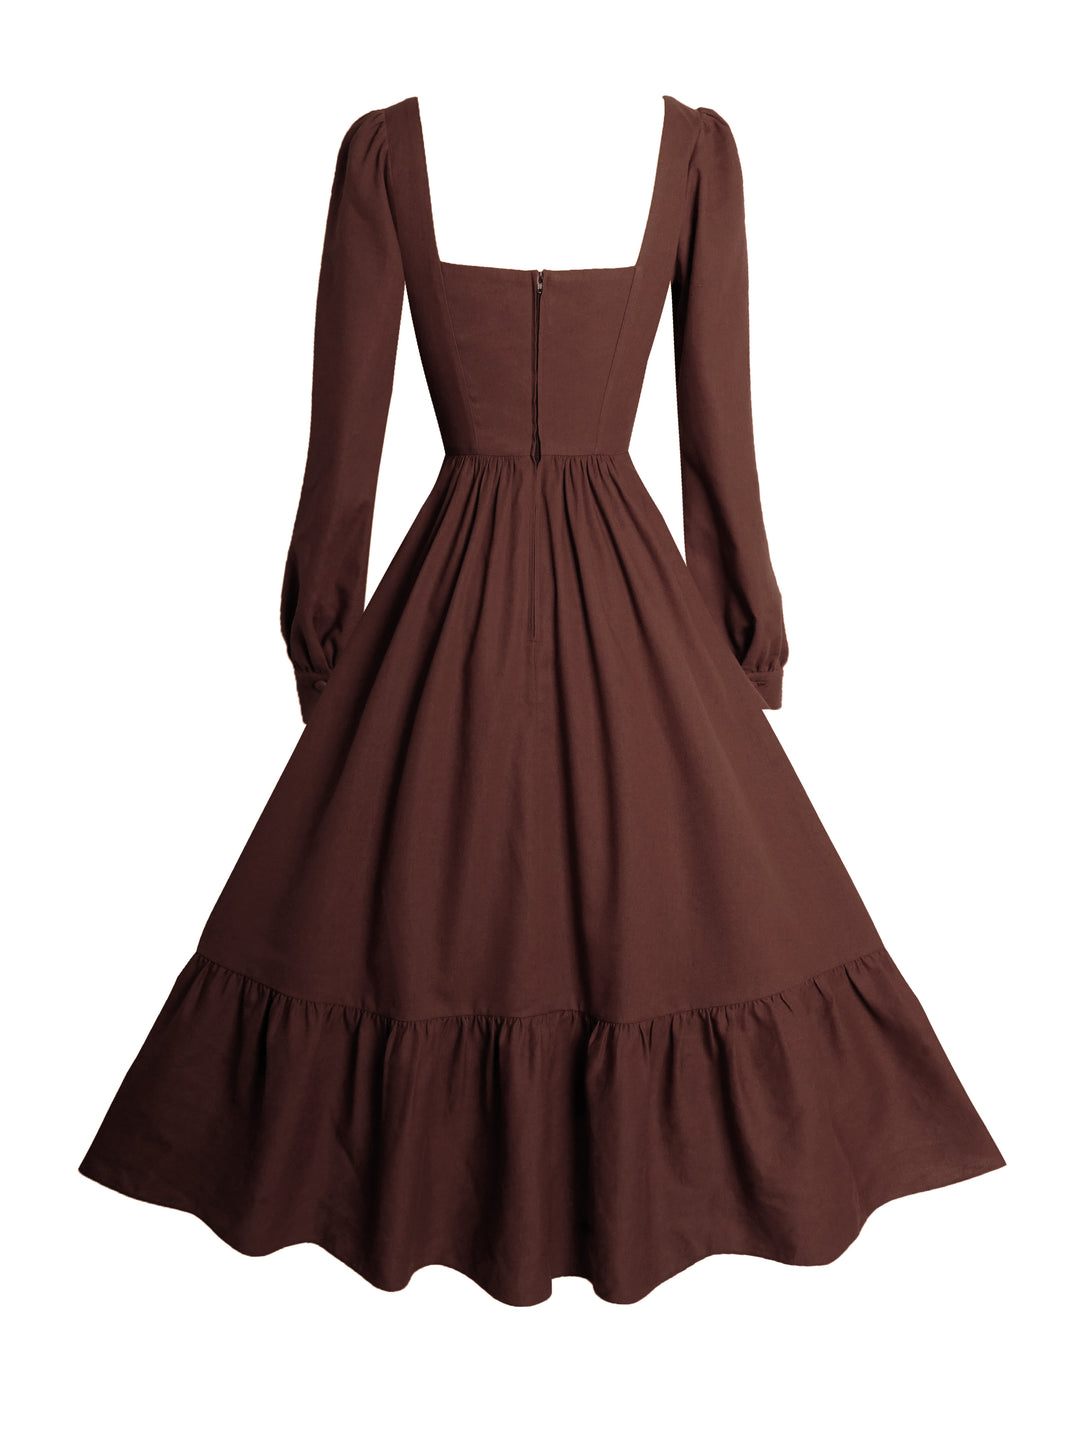 MTO - Mary Dress in Walnut Linen